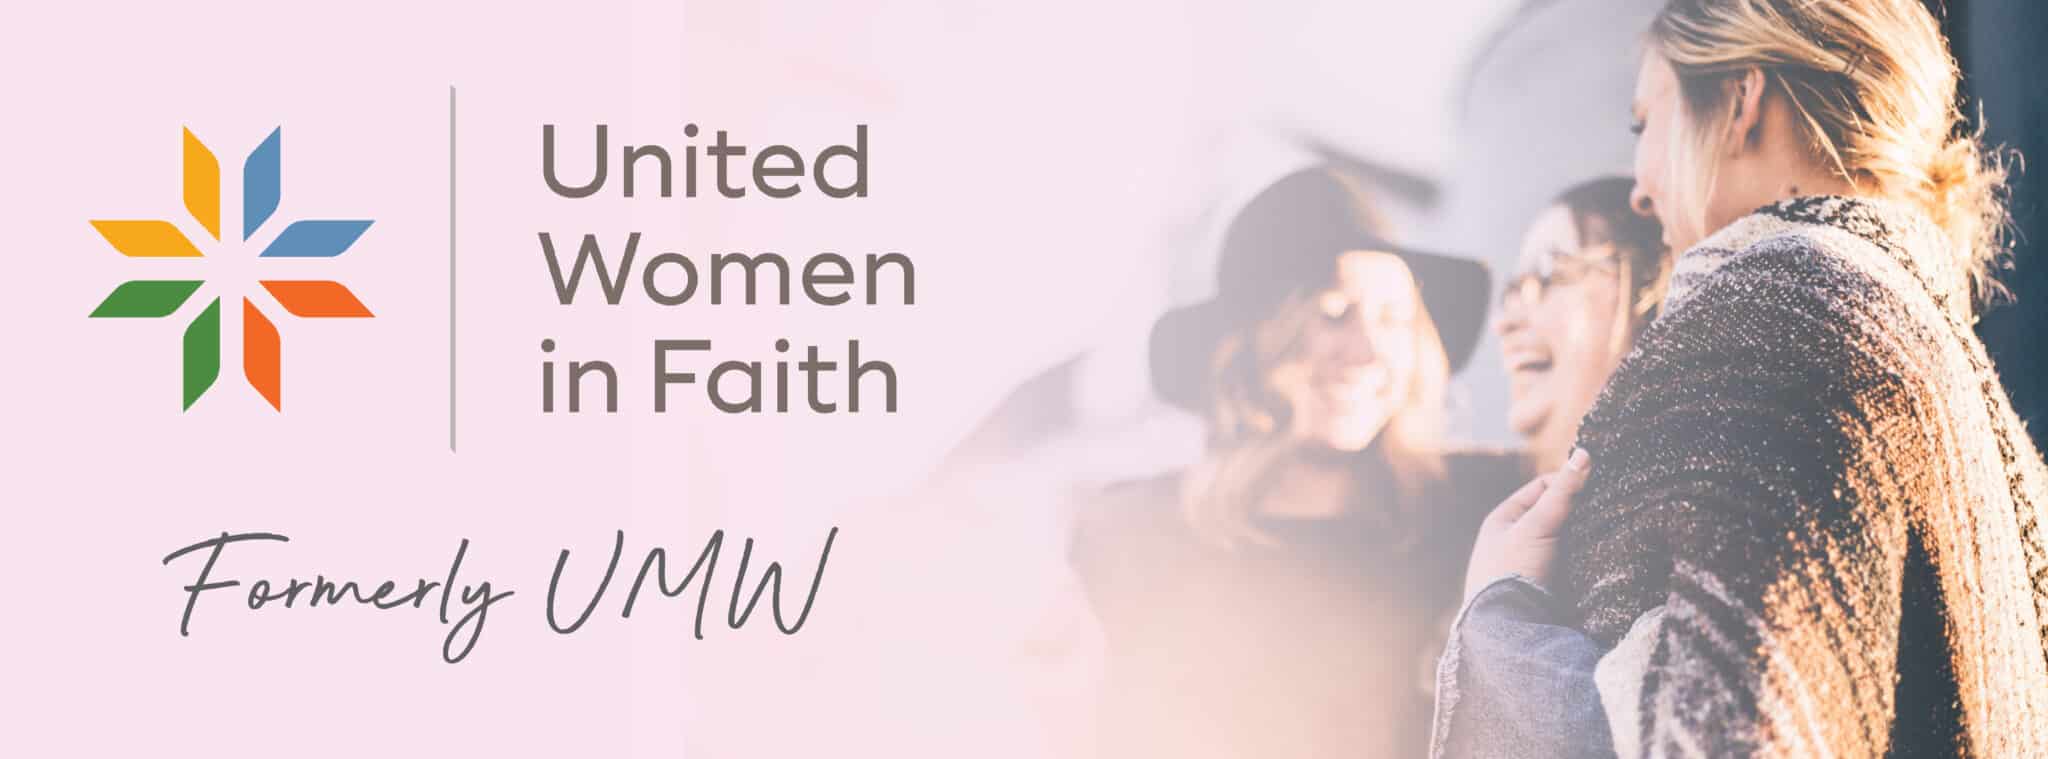 United Women in Faith // Christmas Program McFarlin United Methodist